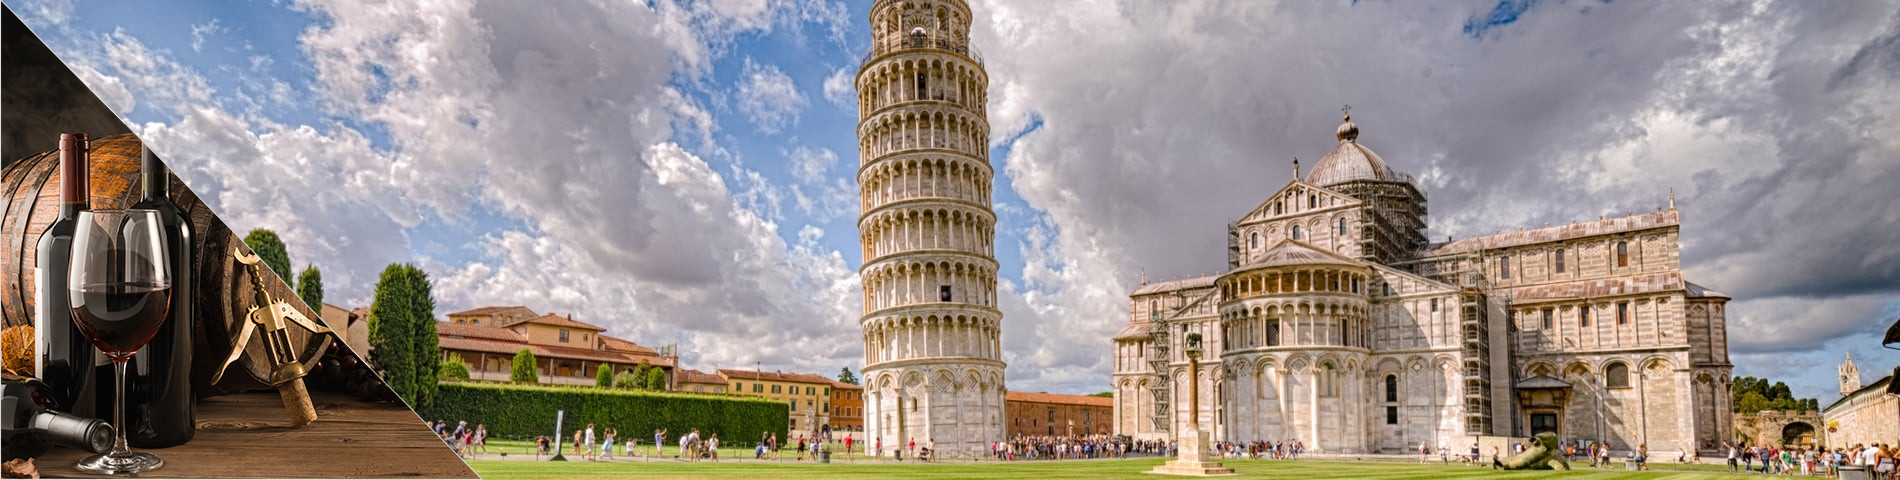 Pisa - Taliančina a enológia